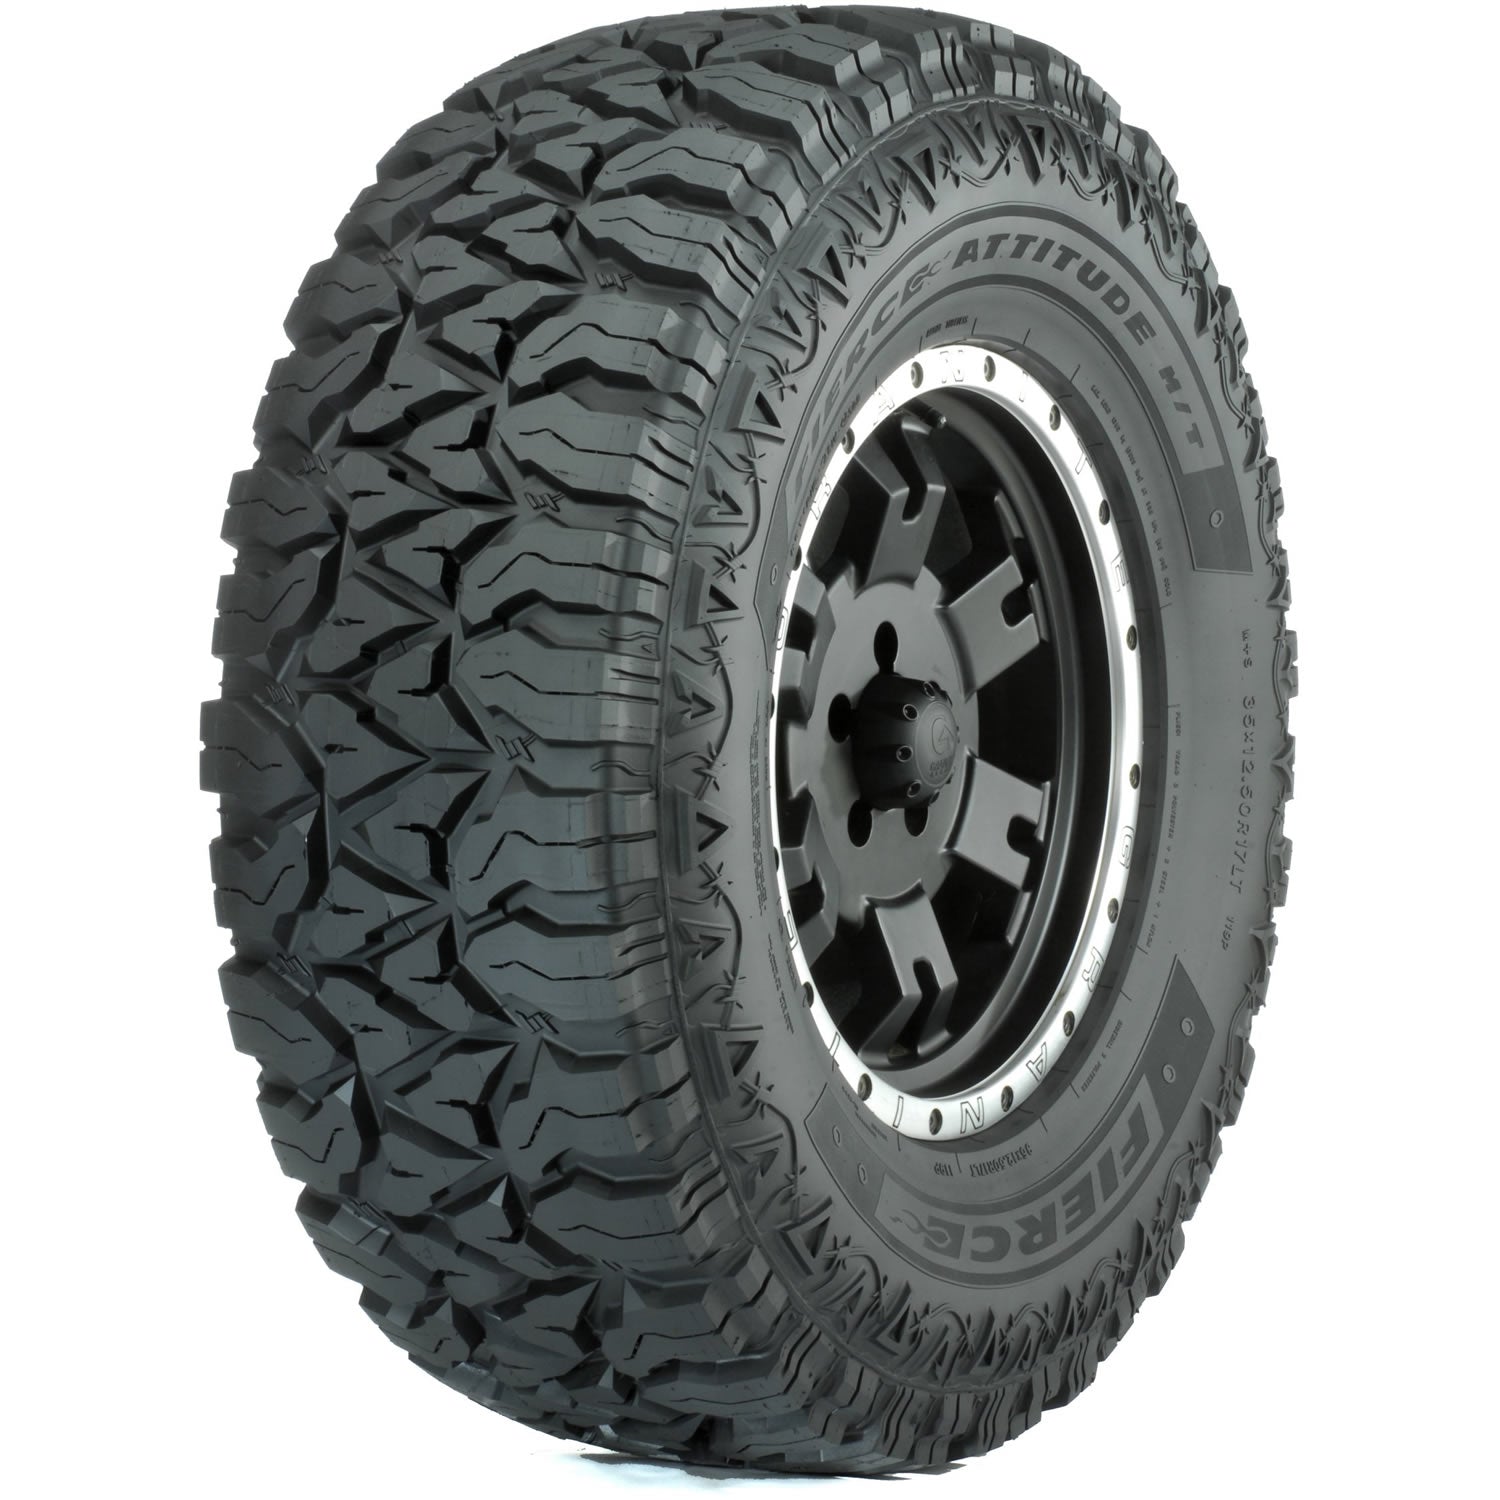 FIERCE ATTITUDE MT LT275/65R20 (34.1X11R 20) Tires